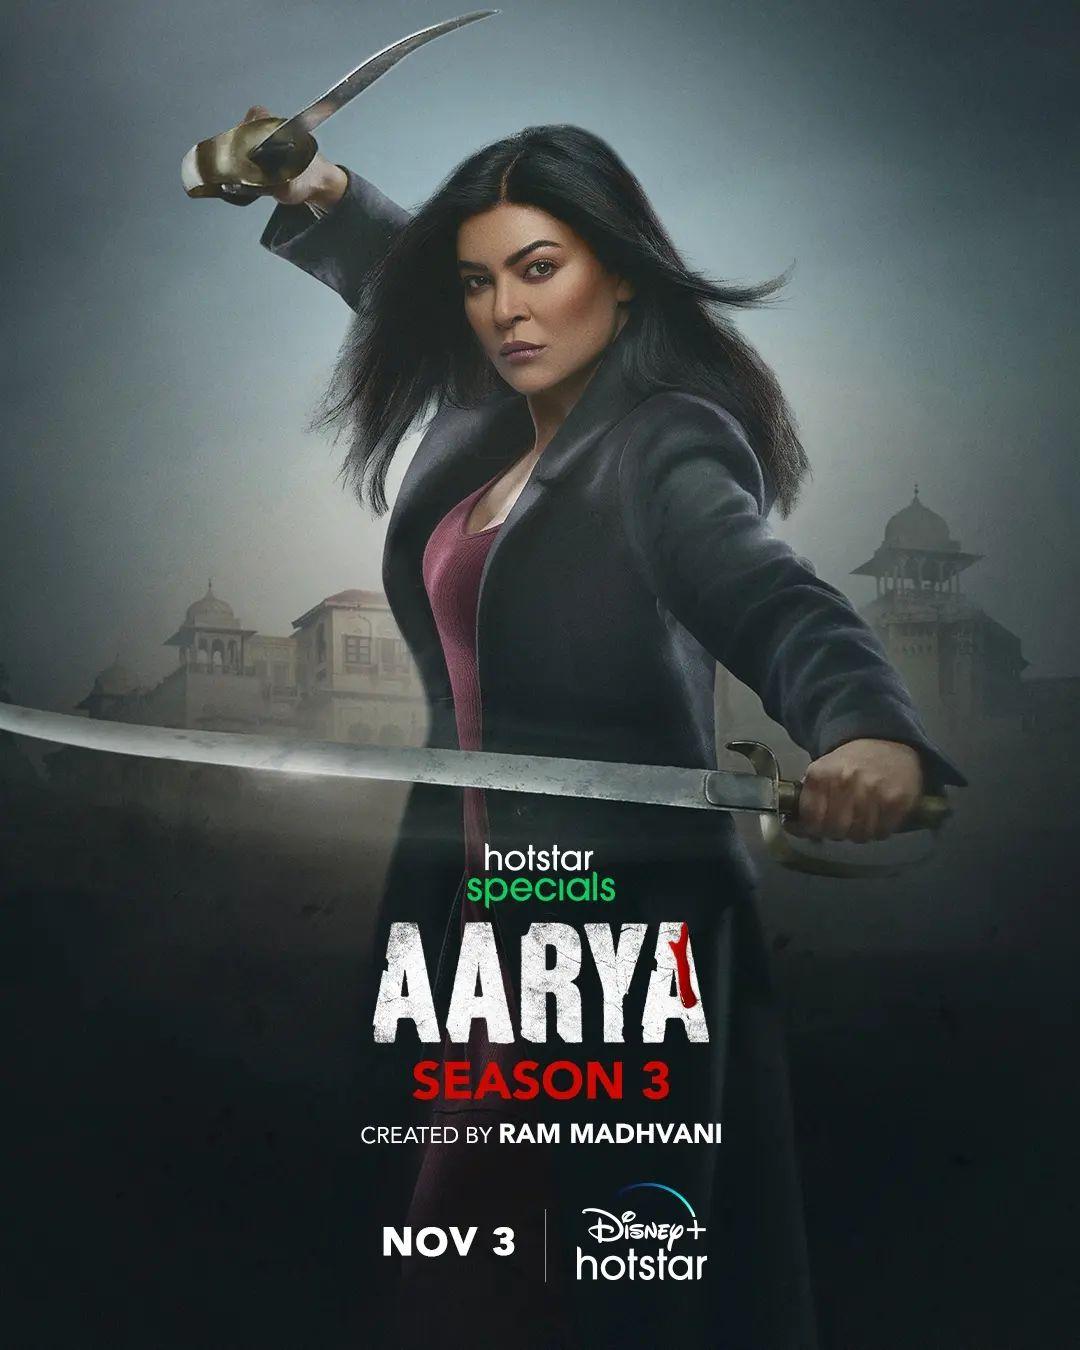 Aarya Season 3 -  November 3In a much-anticipated return,  Sushmita Sen reprises her role as Aarya Sareen in the upcoming third season of the award-winning series, 